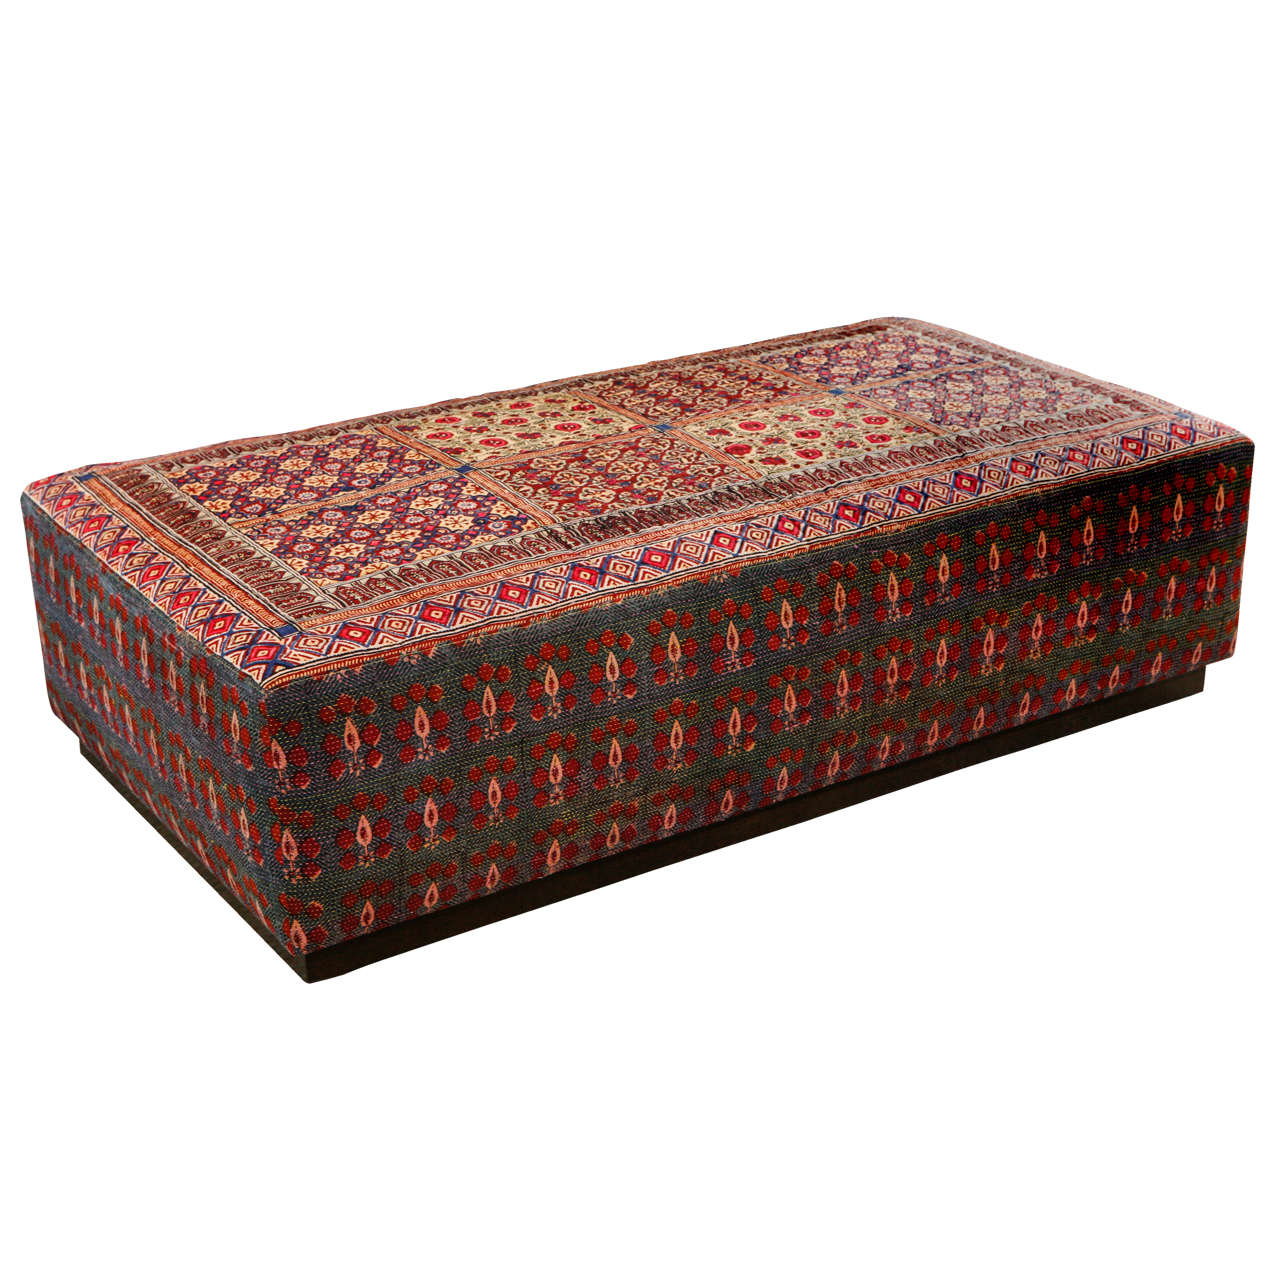 Ottoman - Vintage Indian Textiles